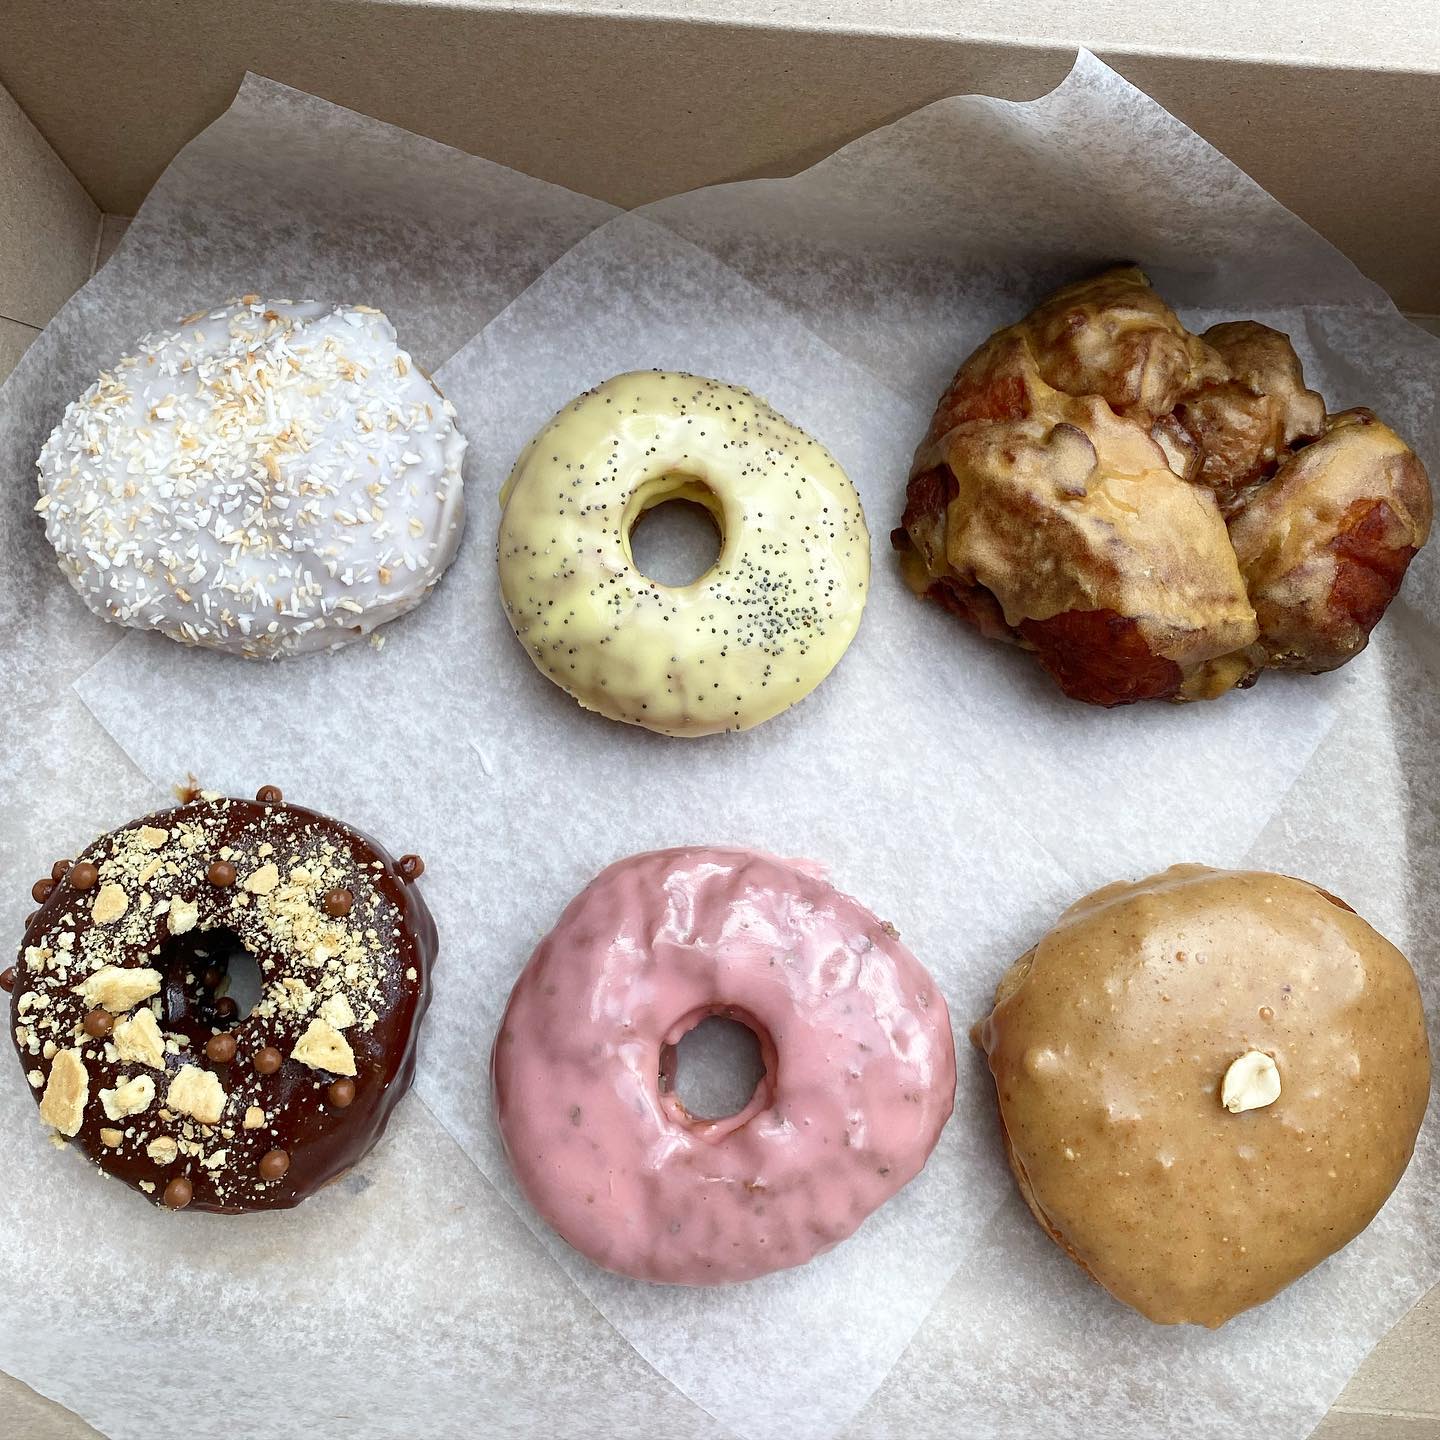 Six hand made doughnuts from a Ritual Doughnuts subscription